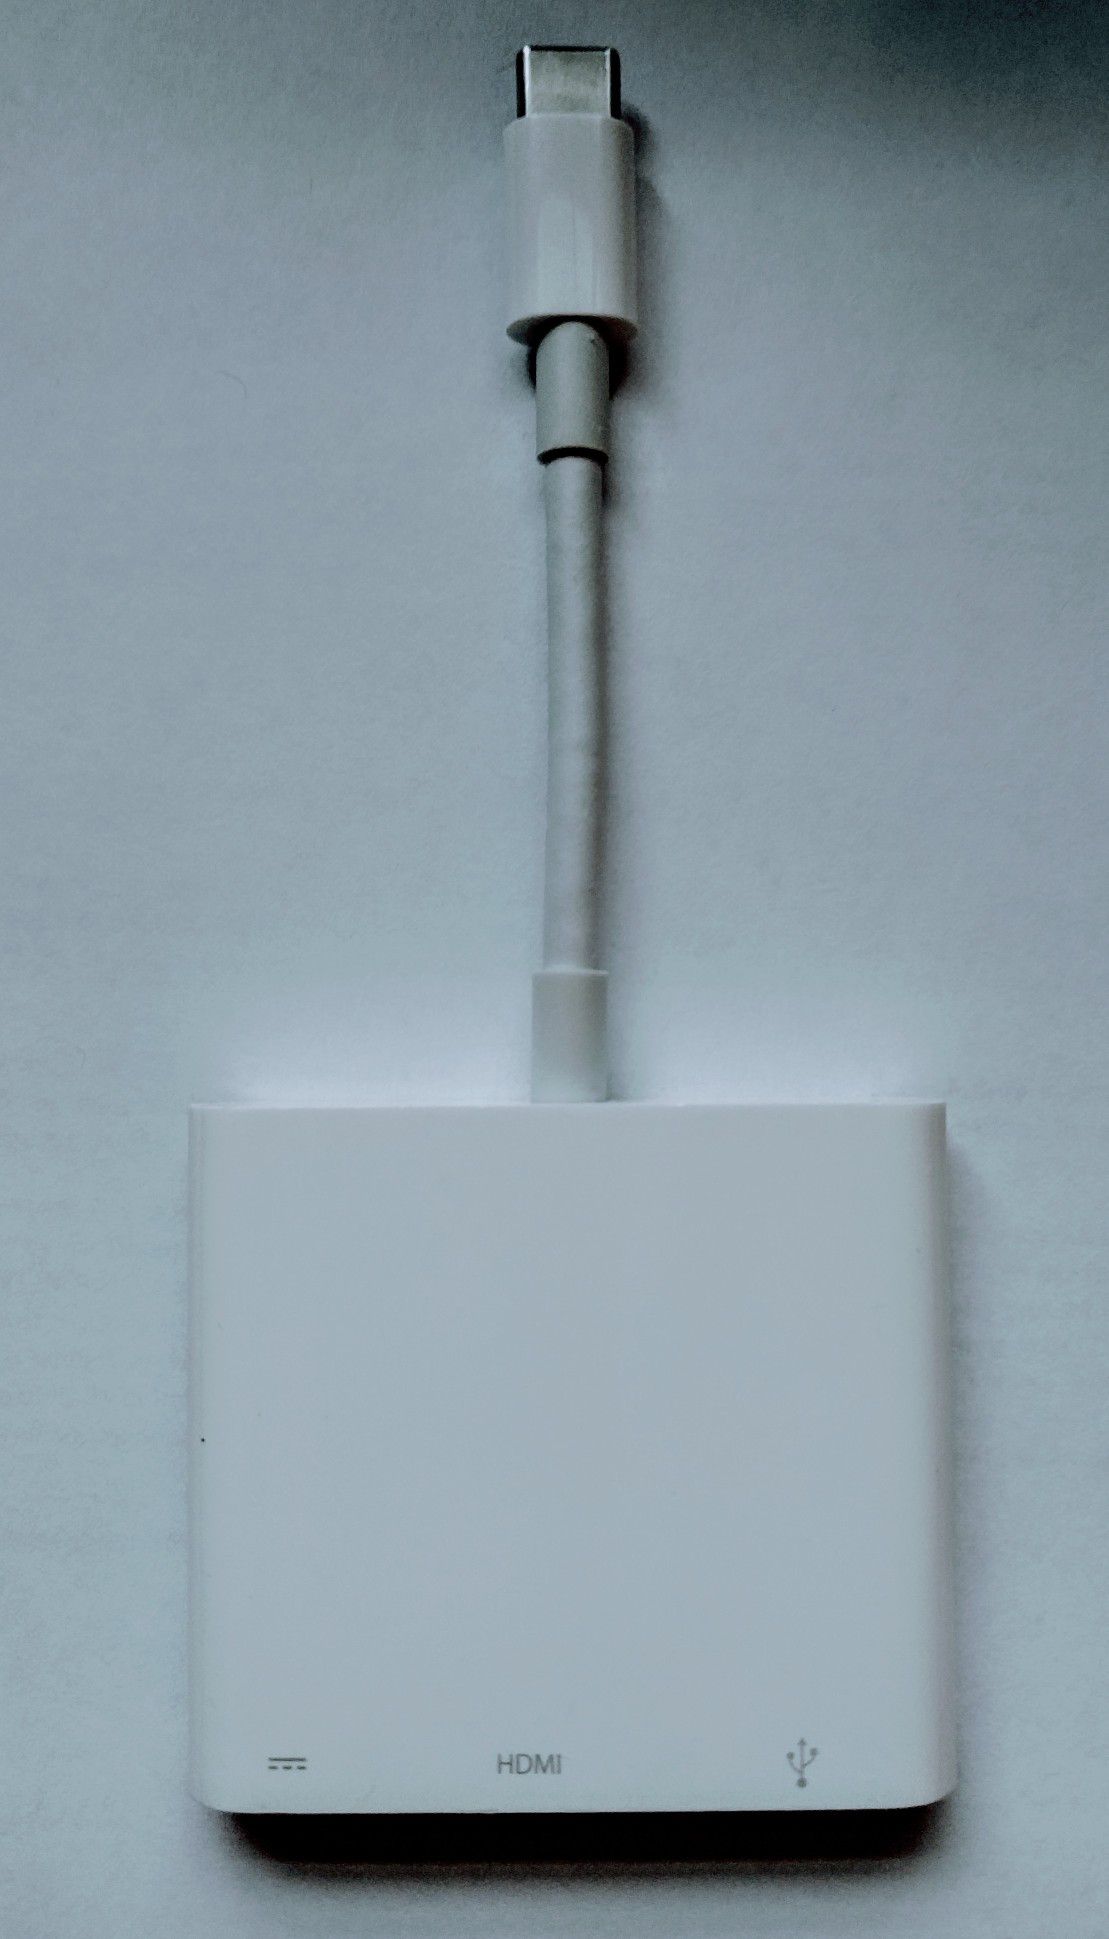 Apple USB-C Digital AV Multiport Adapter Pre-Owned